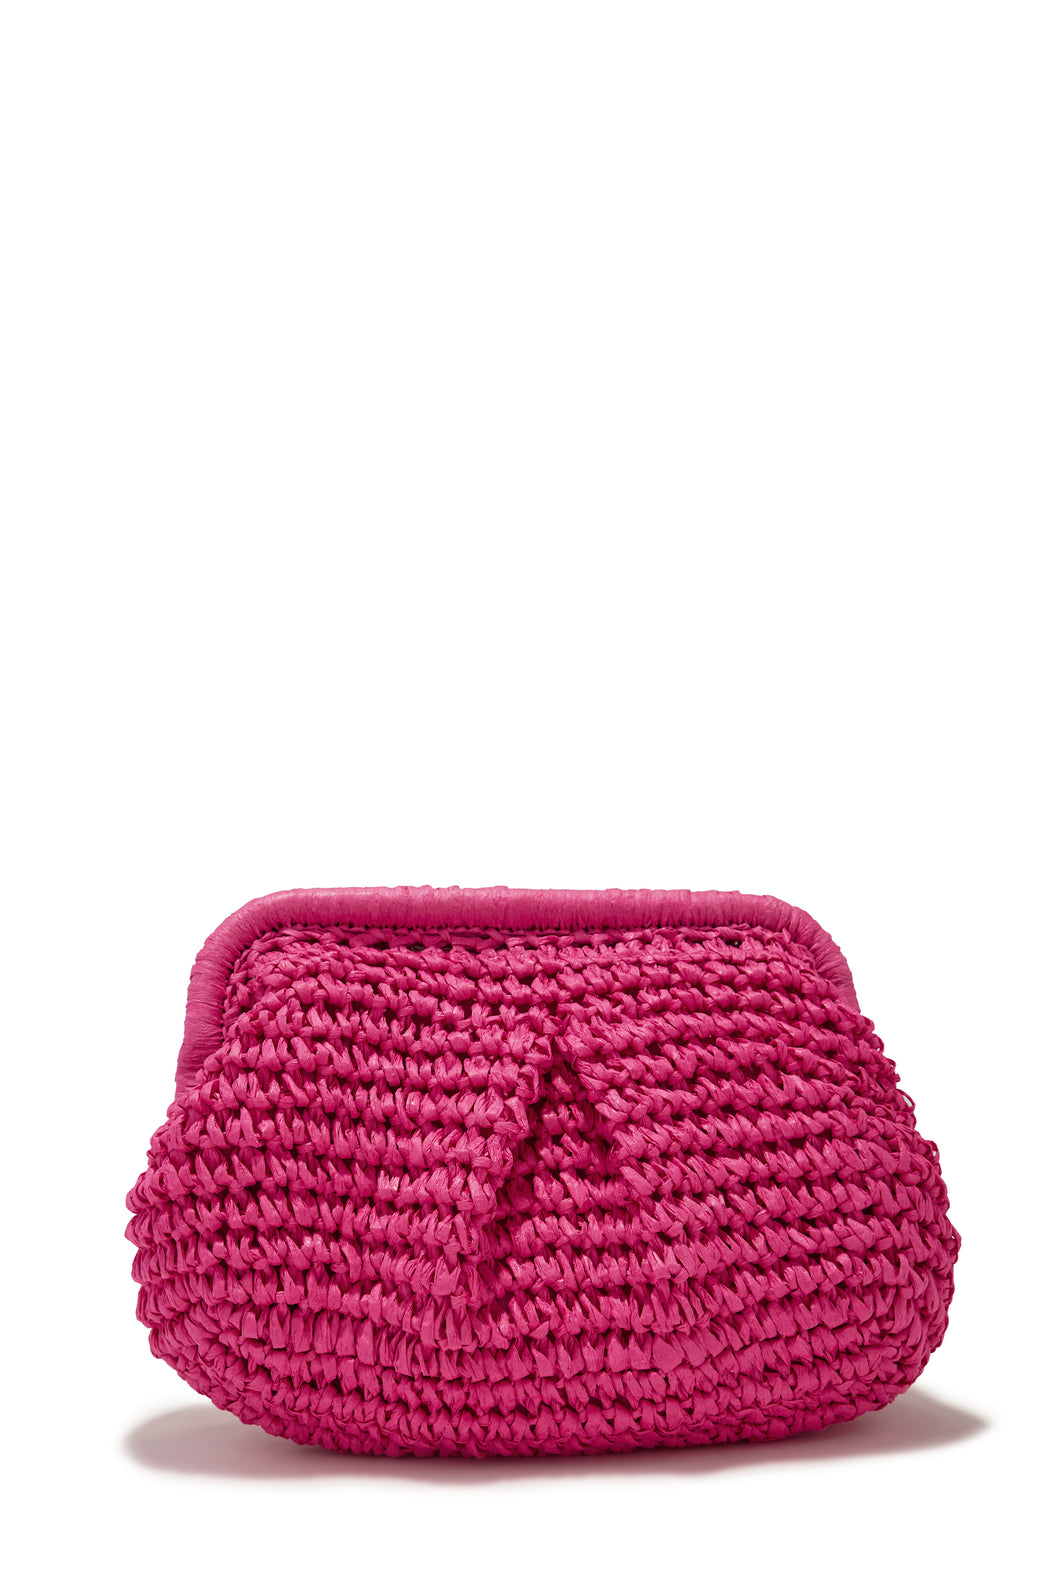 Pink Woven Handbag Perfect For Vacations